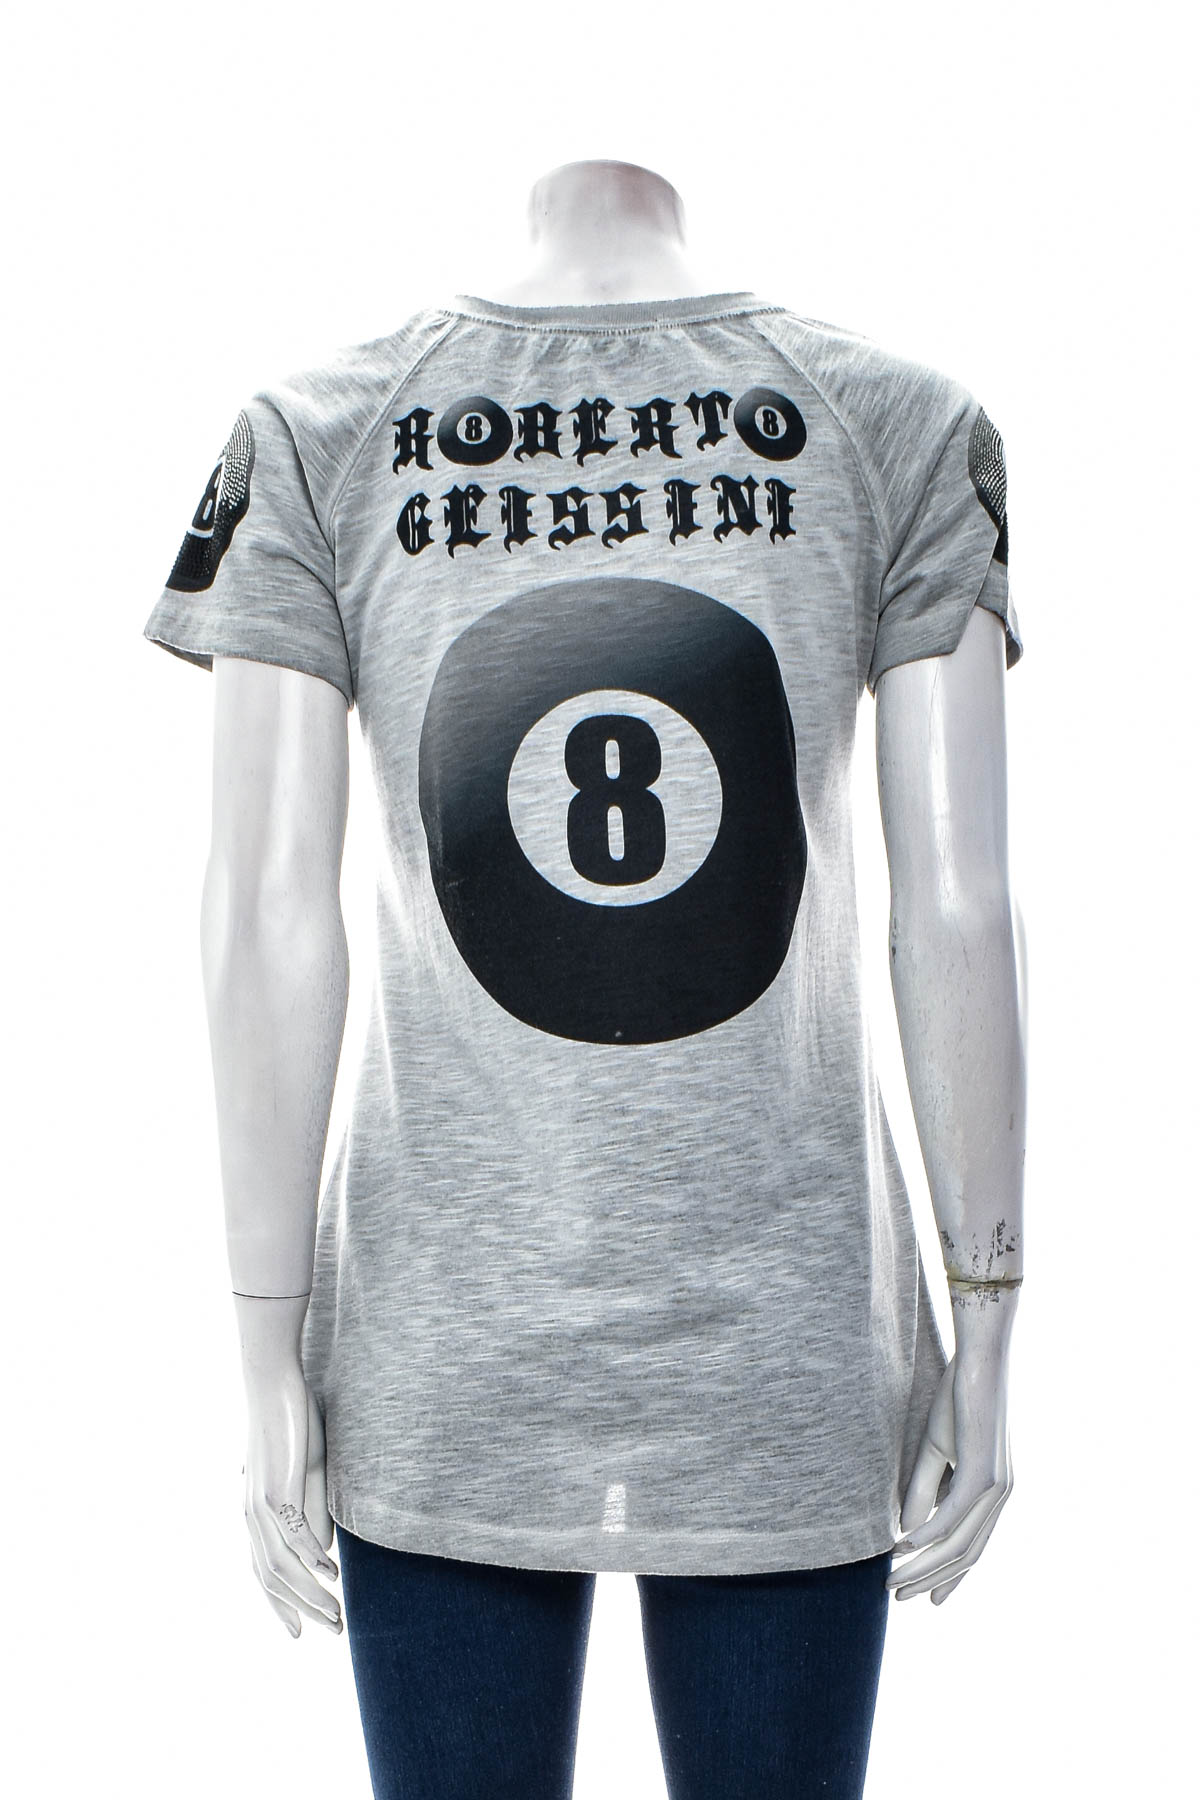 Women's t-shirt - Roberto Geissini - 1